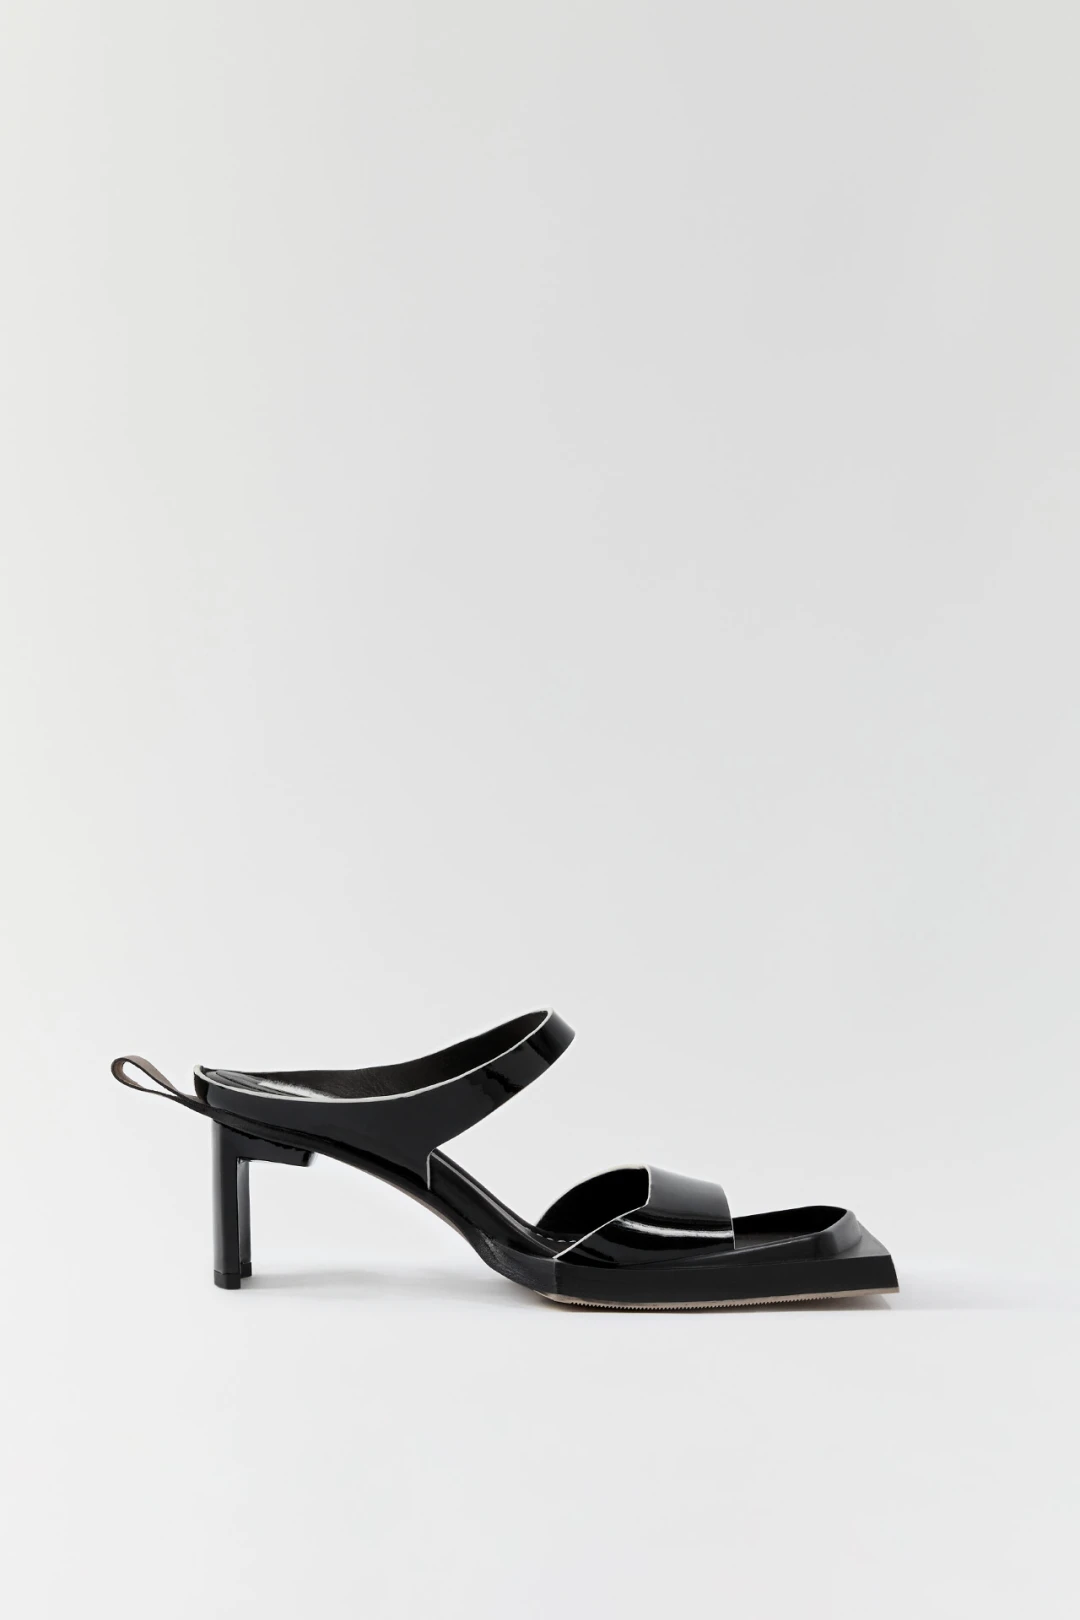 Ren Black Sandals | Miista Europe | Made in Spain